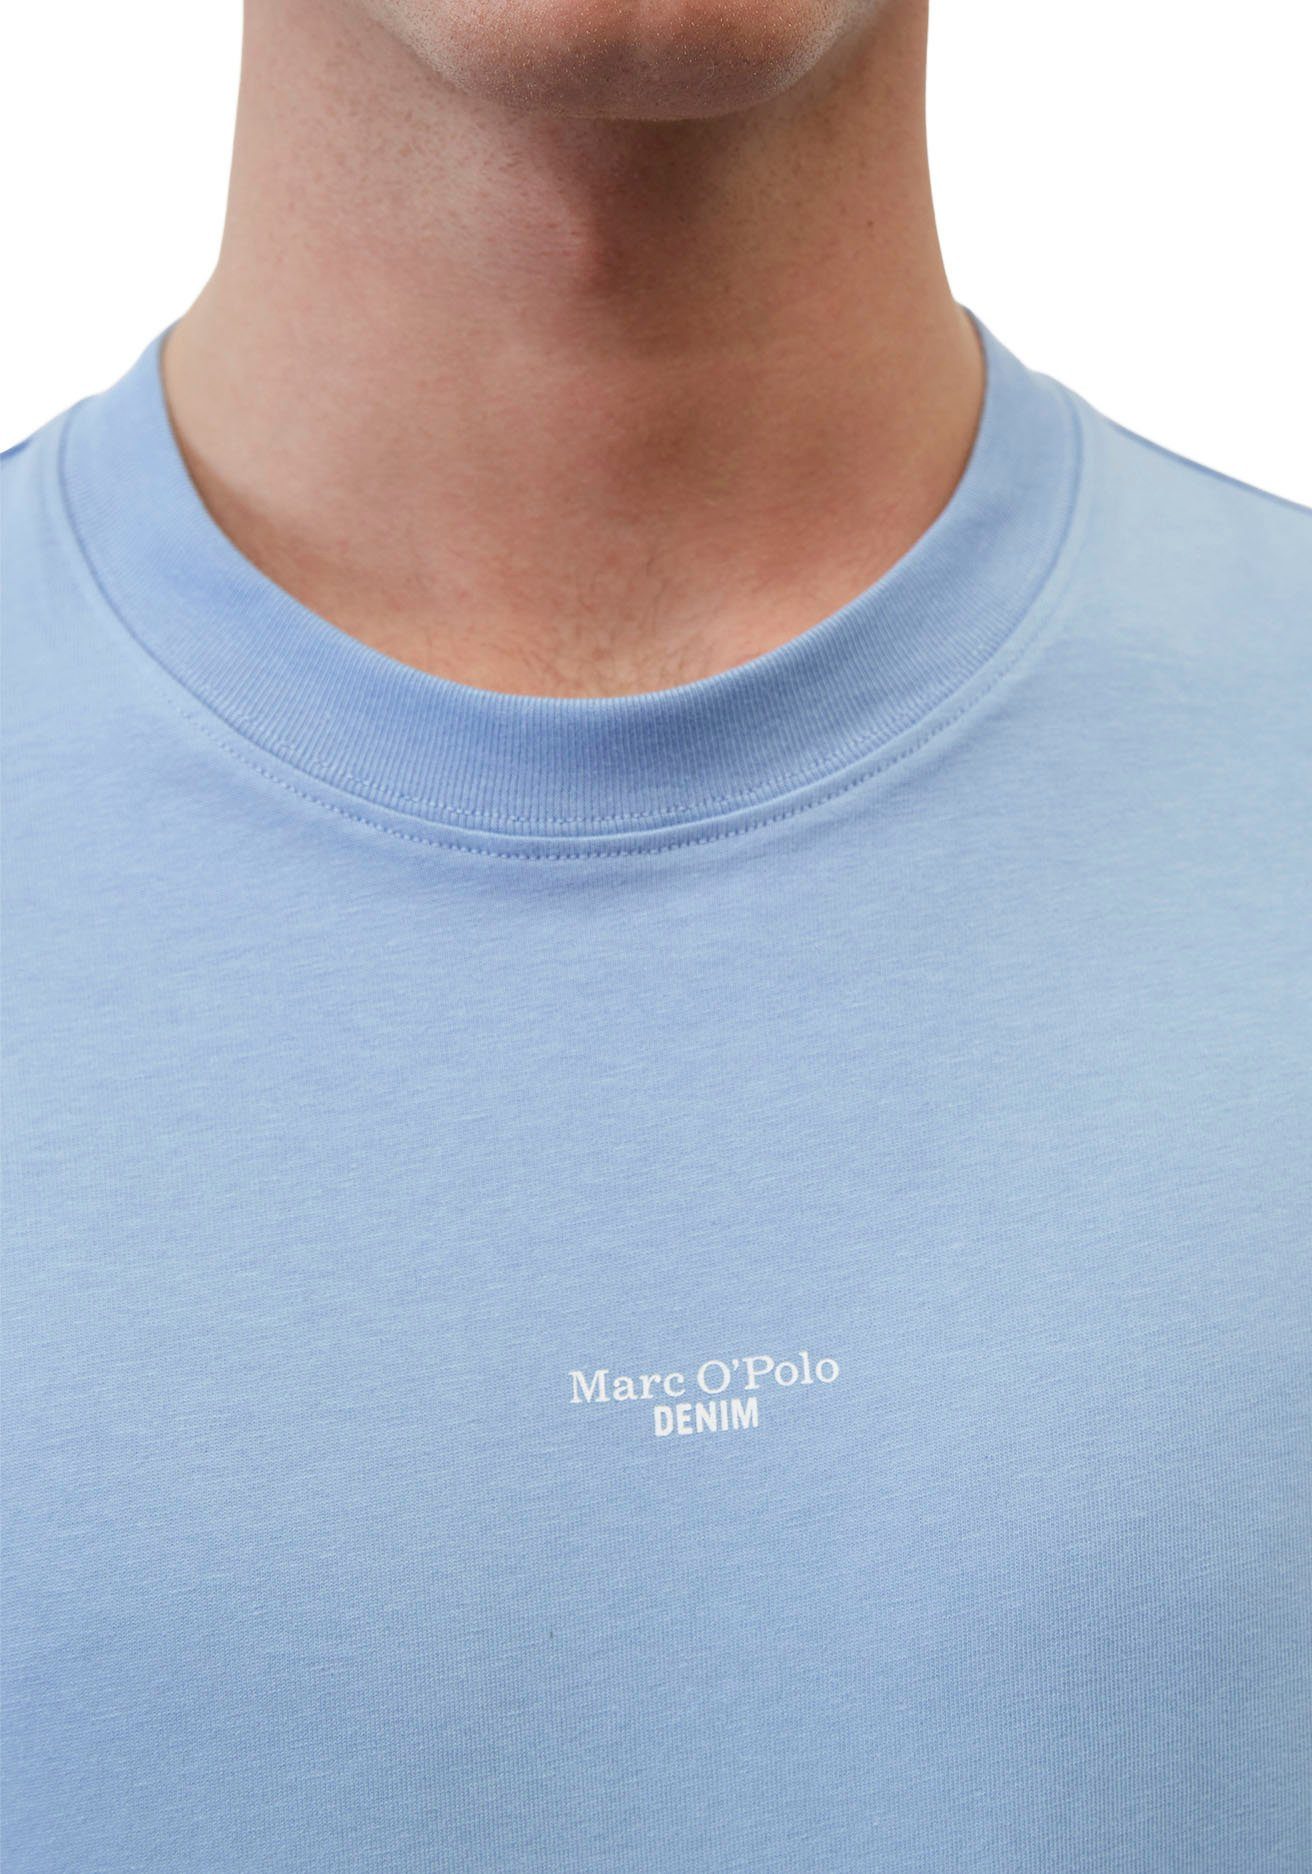 Labeling T-Shirt mittig vorne Marc O'Polo DENIM mittelblau mit